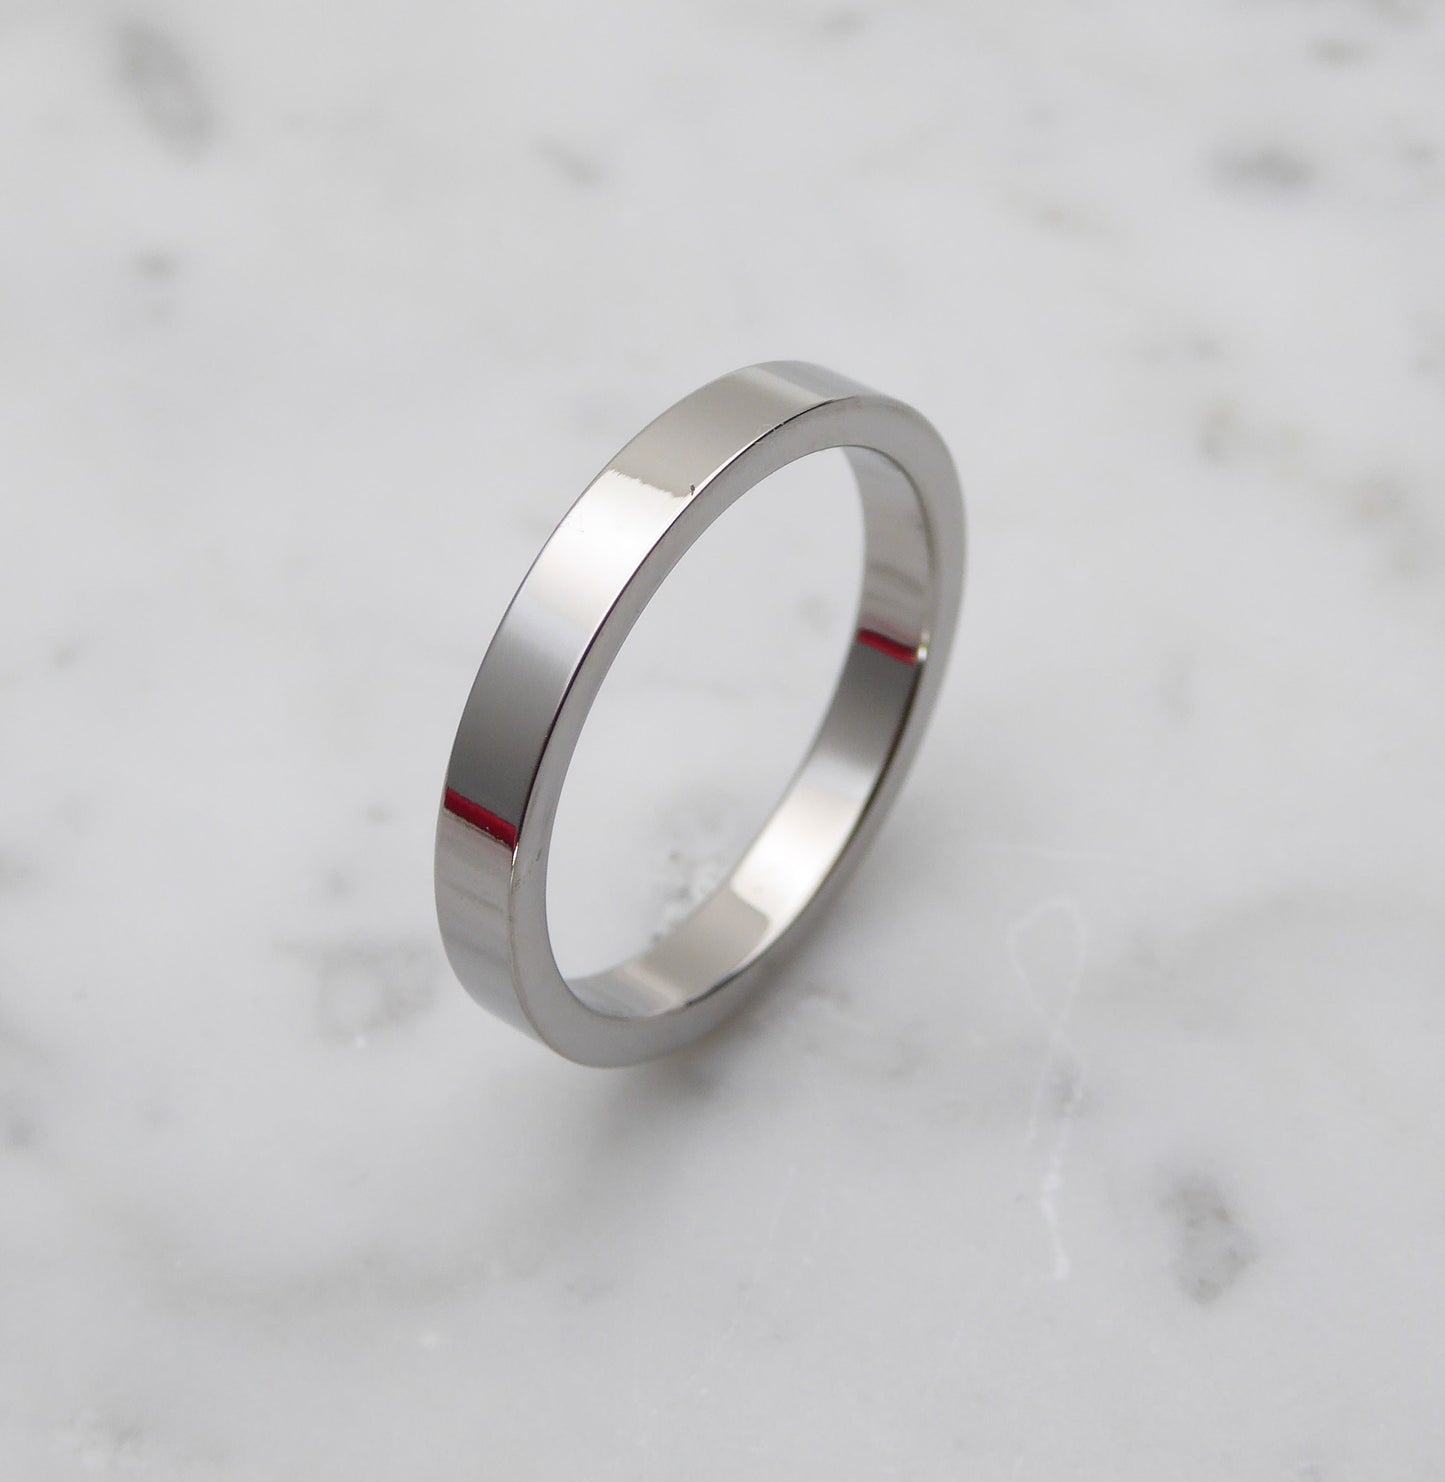 3mm Titanium Flat / Square Shape Plain band Wedding Ring in either polished or matte brushed finish